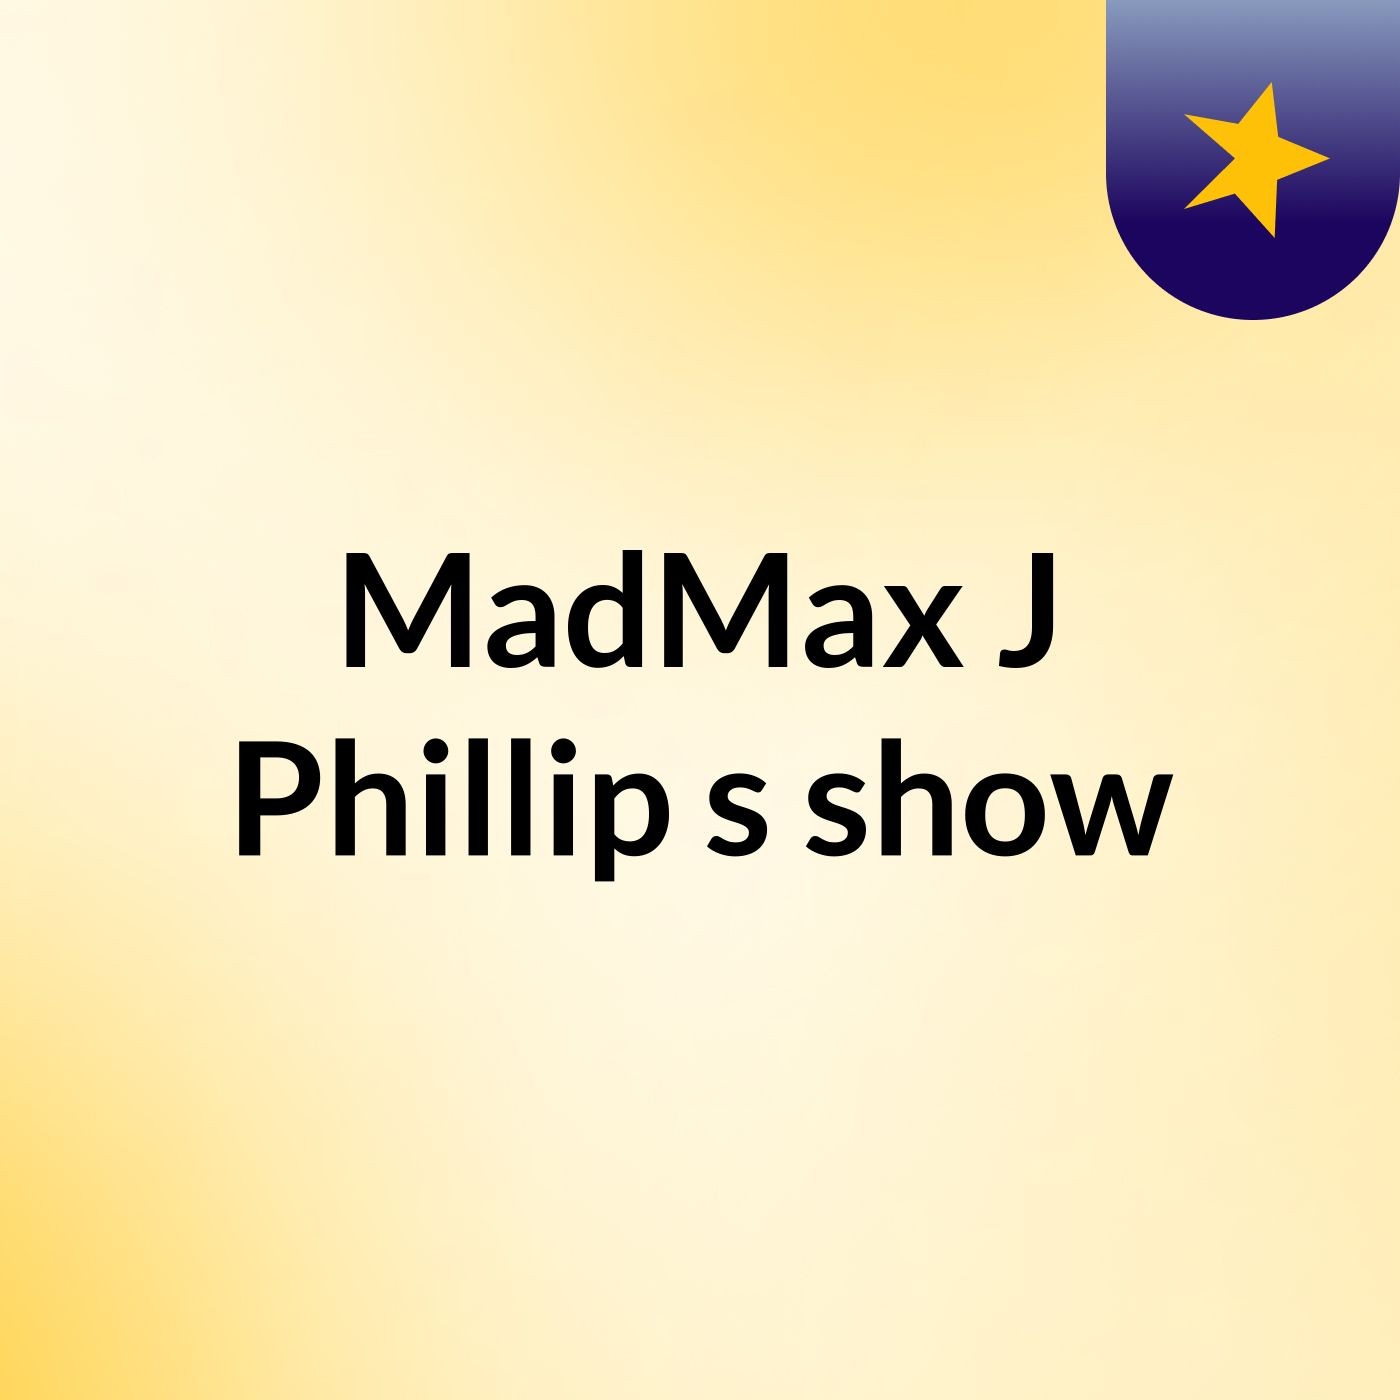 MadMax J Phillip's show